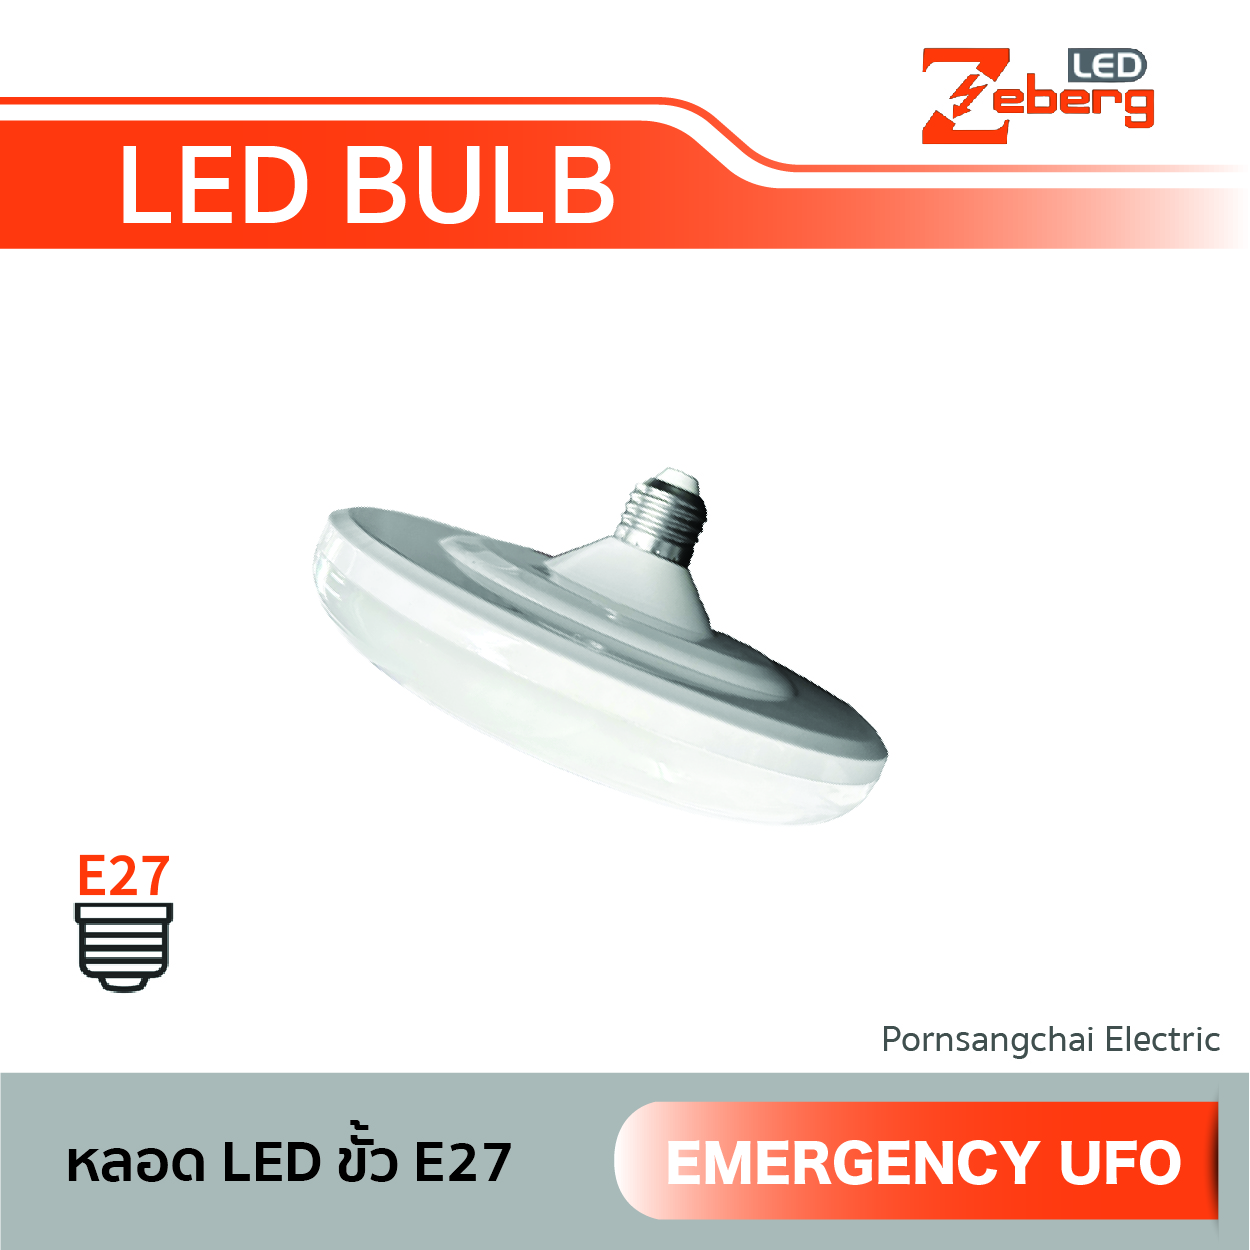 ZEBERG LED Bulb E27 Emergency UFO